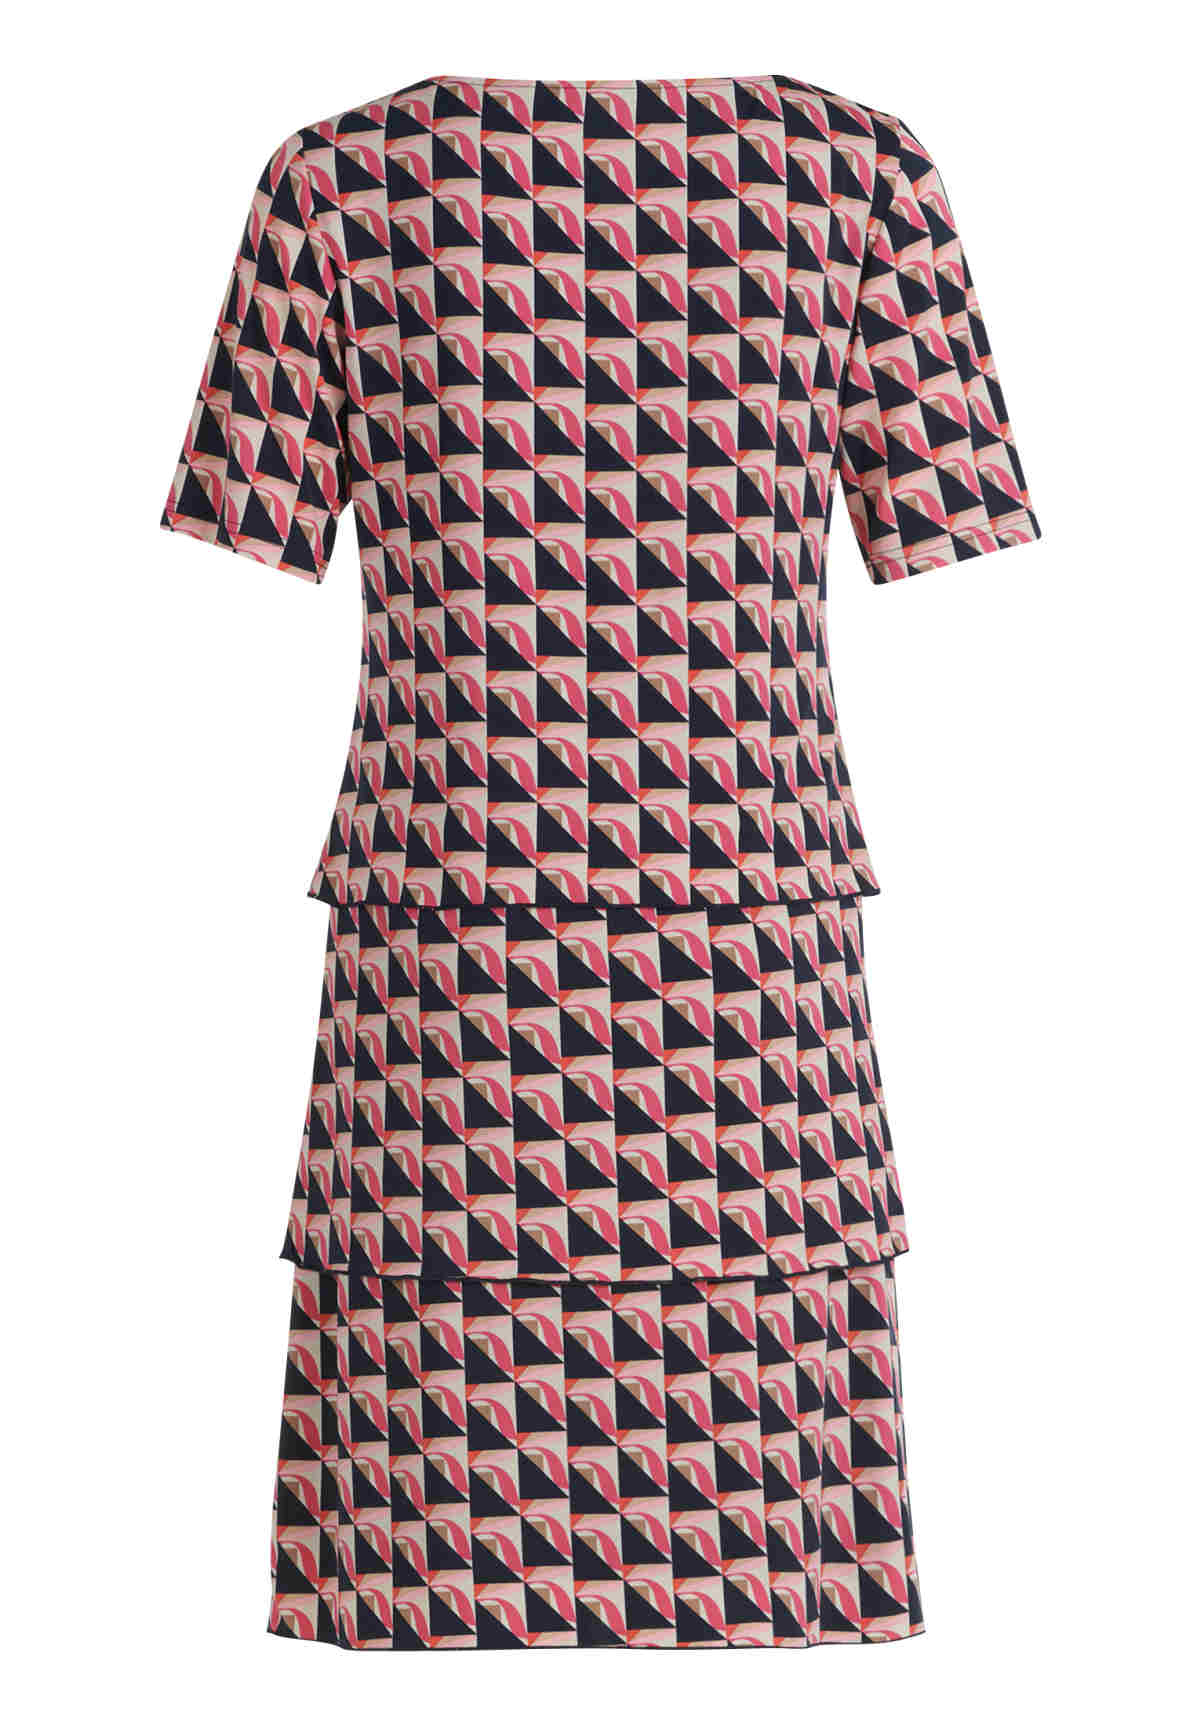 Betty Barclay Geo Print Dress